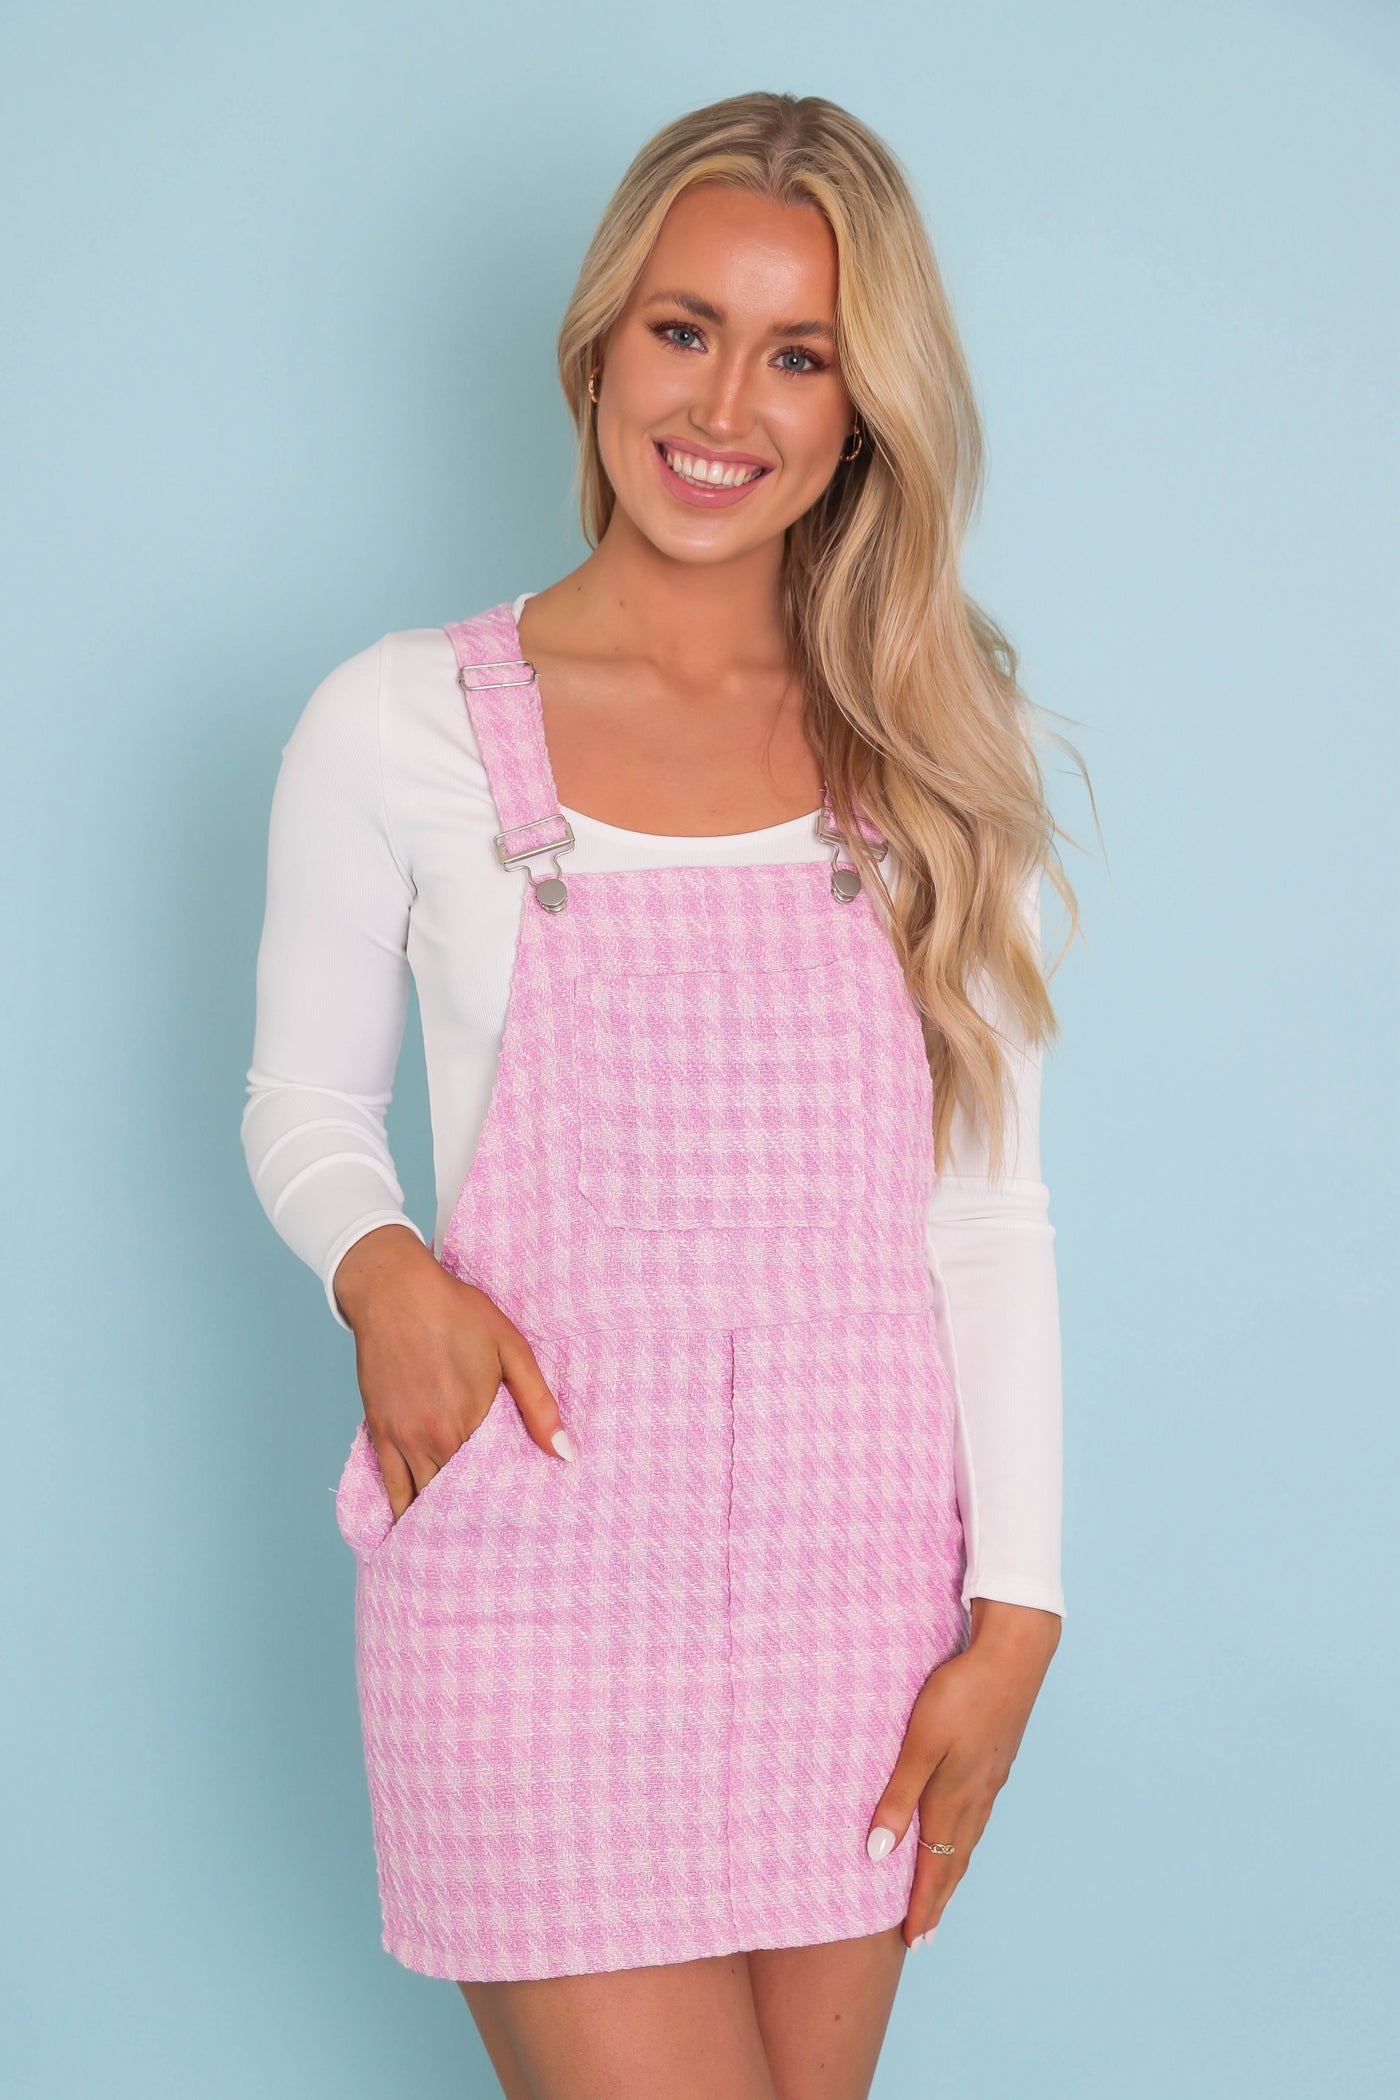 Blush Pink Overall Dress- Women's Pink Houndstooth Overalls- Storia Pink Overall Dress